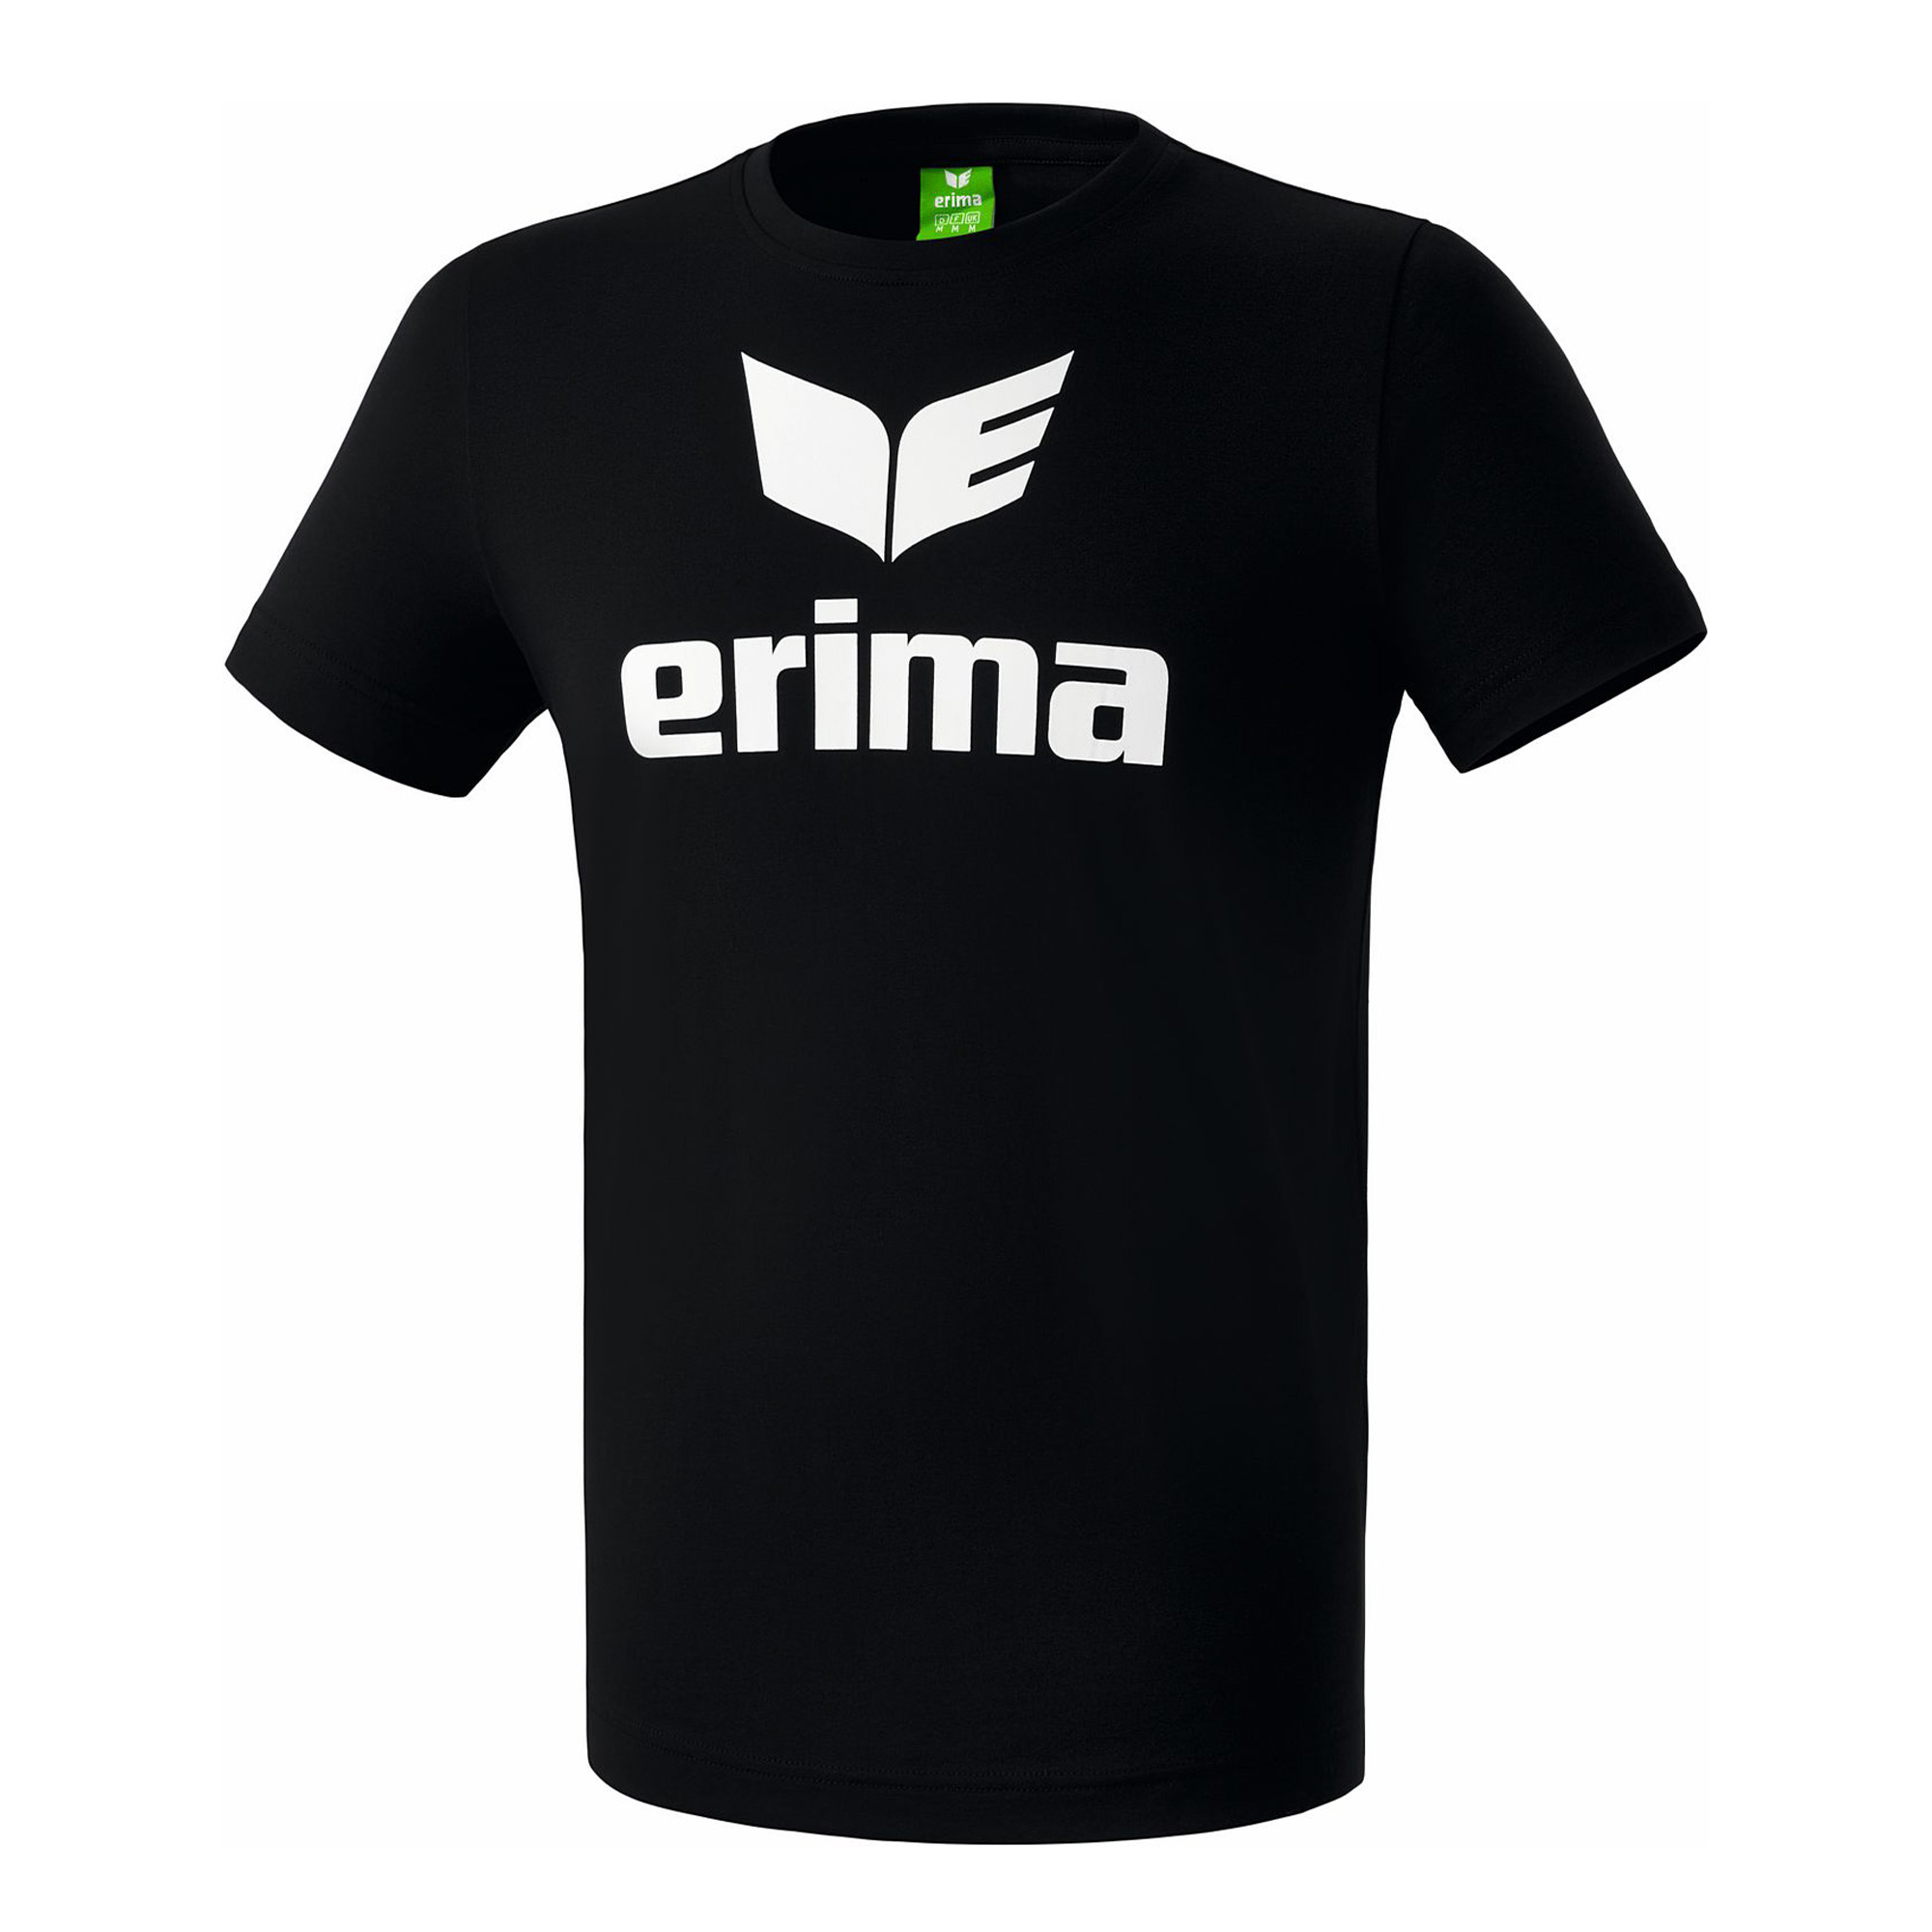 Erima Promo Póló fekete